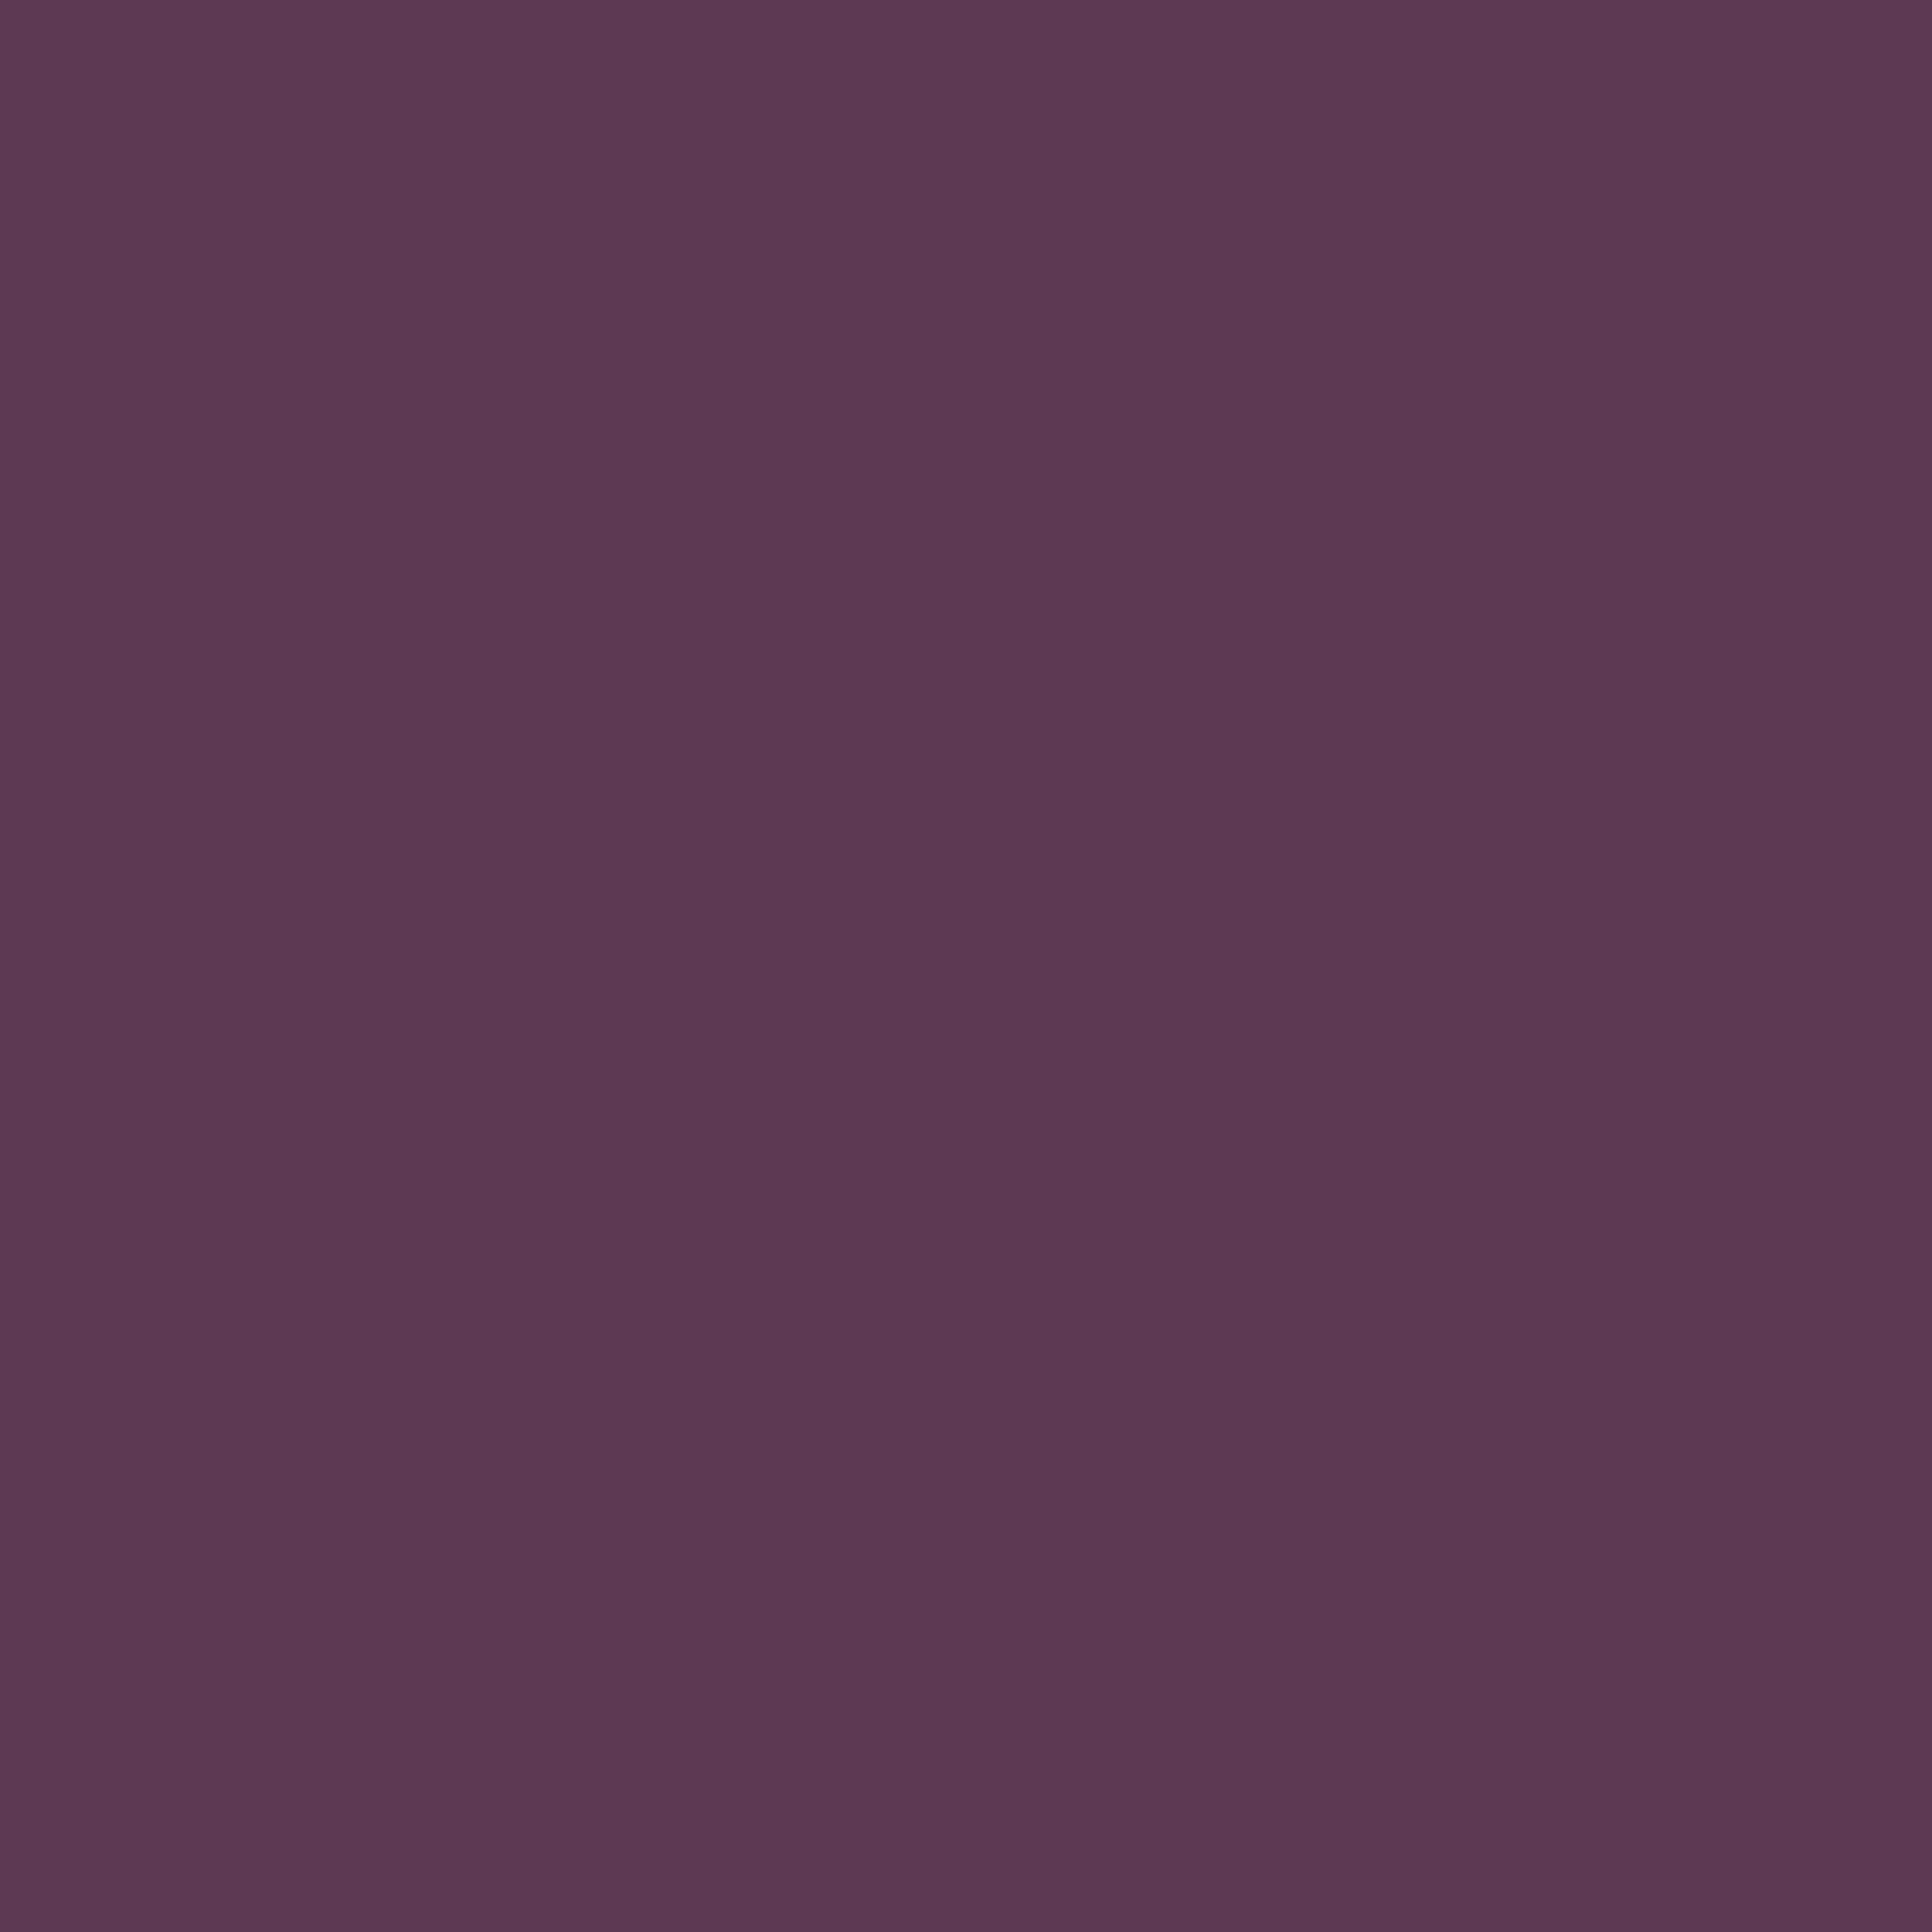 3600x3600 Dark Byzantium Solid Color Background